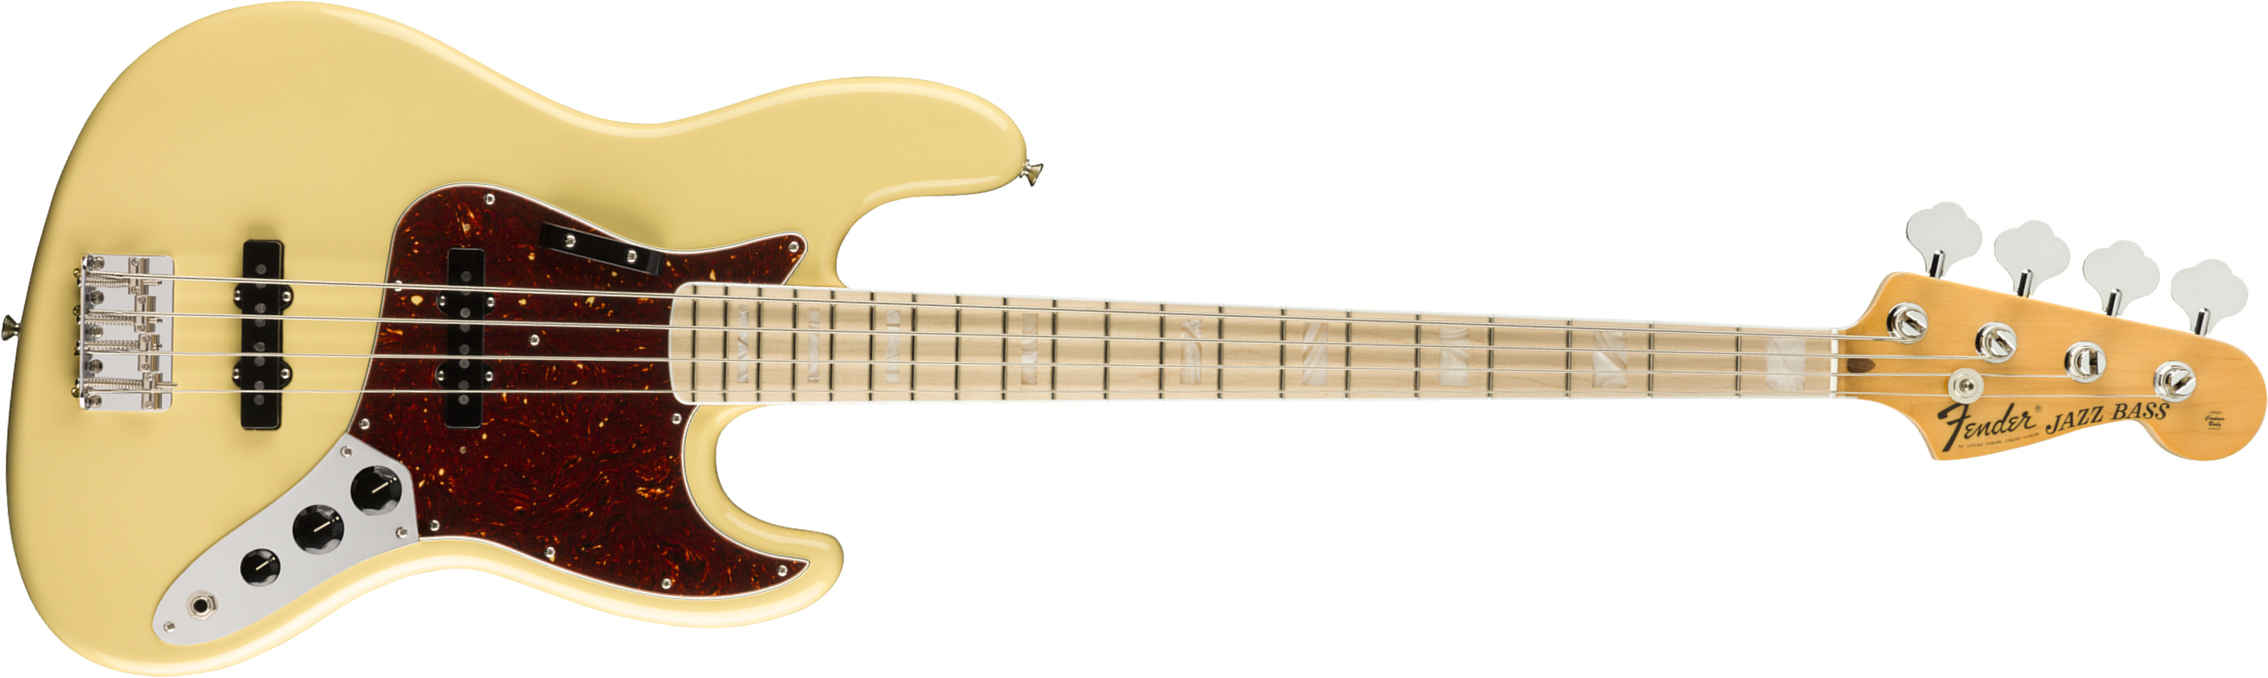 Fender Jazz Bass '70s American Original Usa Mn - Vintage White - Basse Électrique Solid Body - Main picture